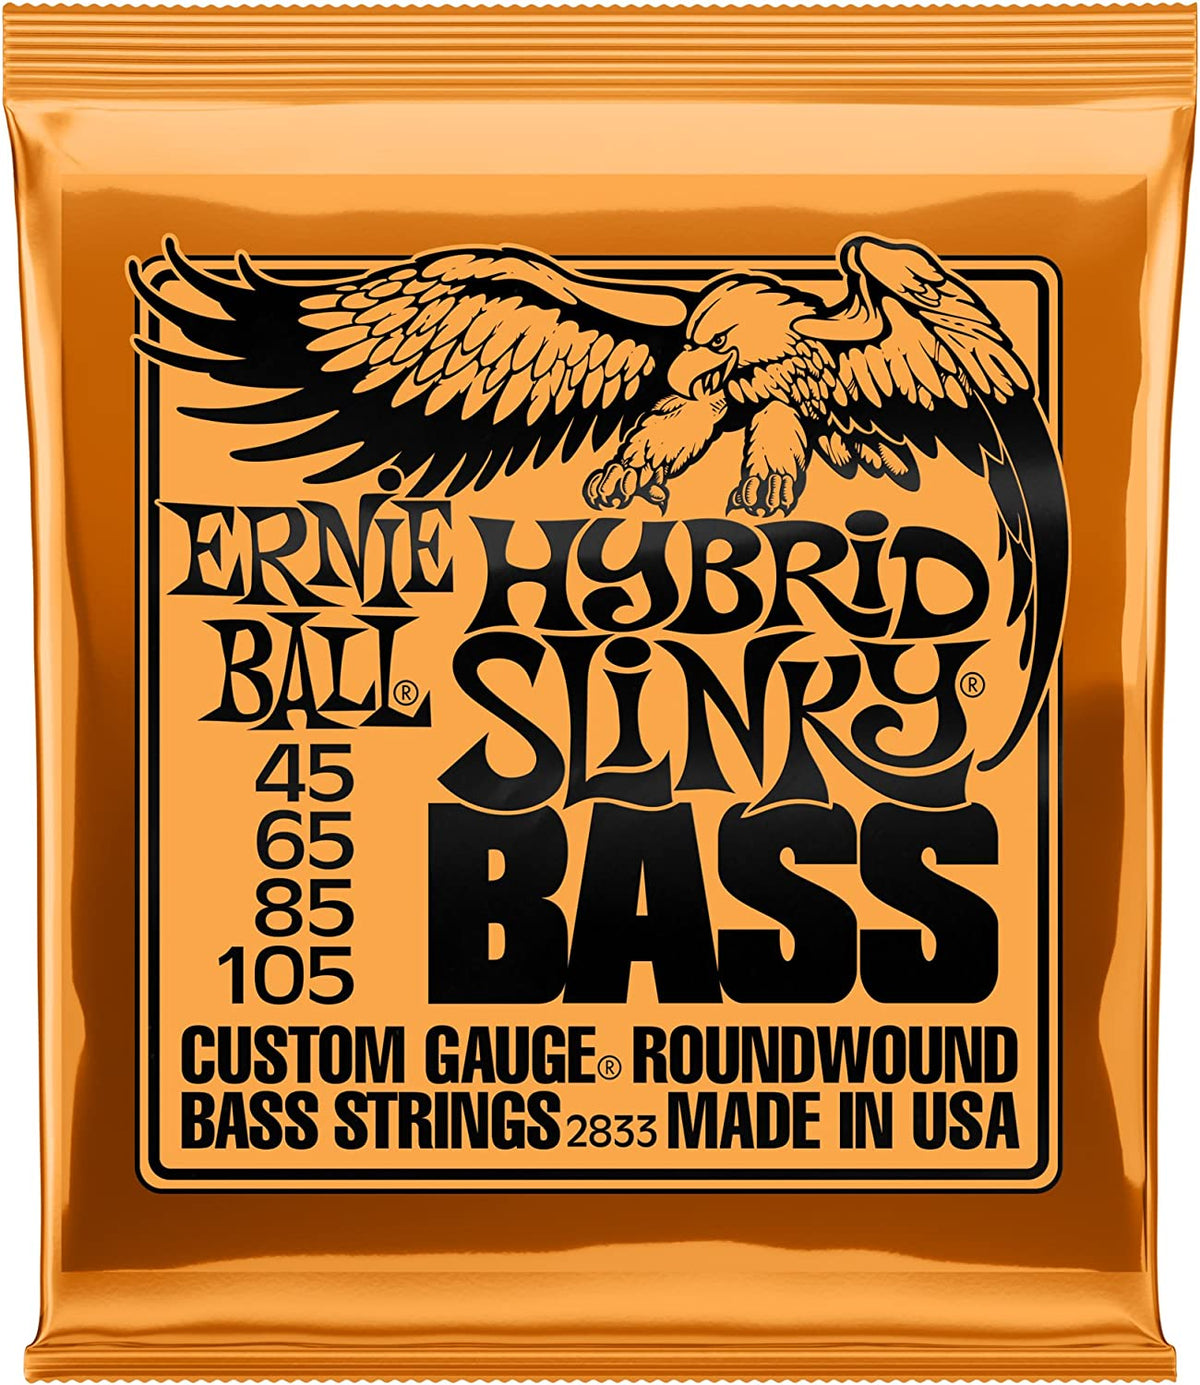 Ernie Ball Hybrid Slinky Bass - 45-105